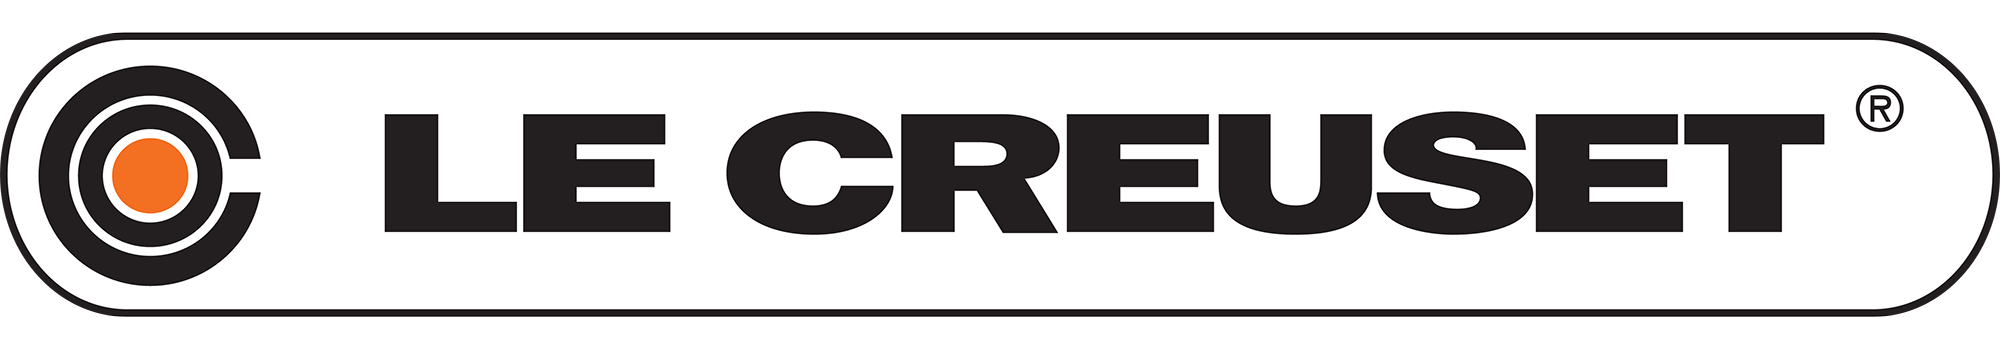 Le Creuset-logo